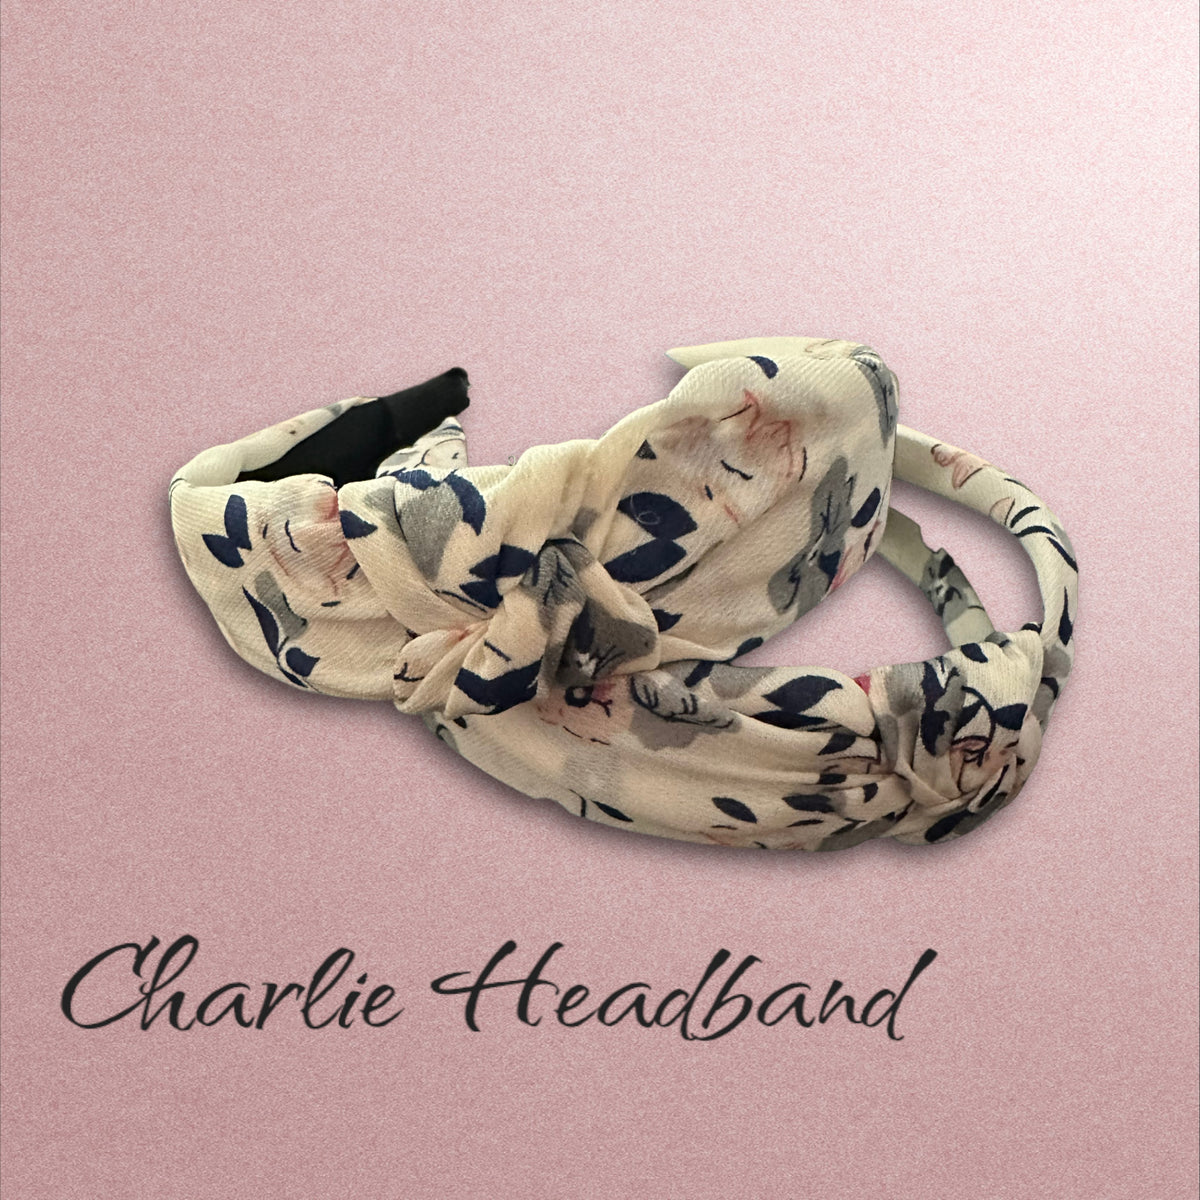 Charlie Headband